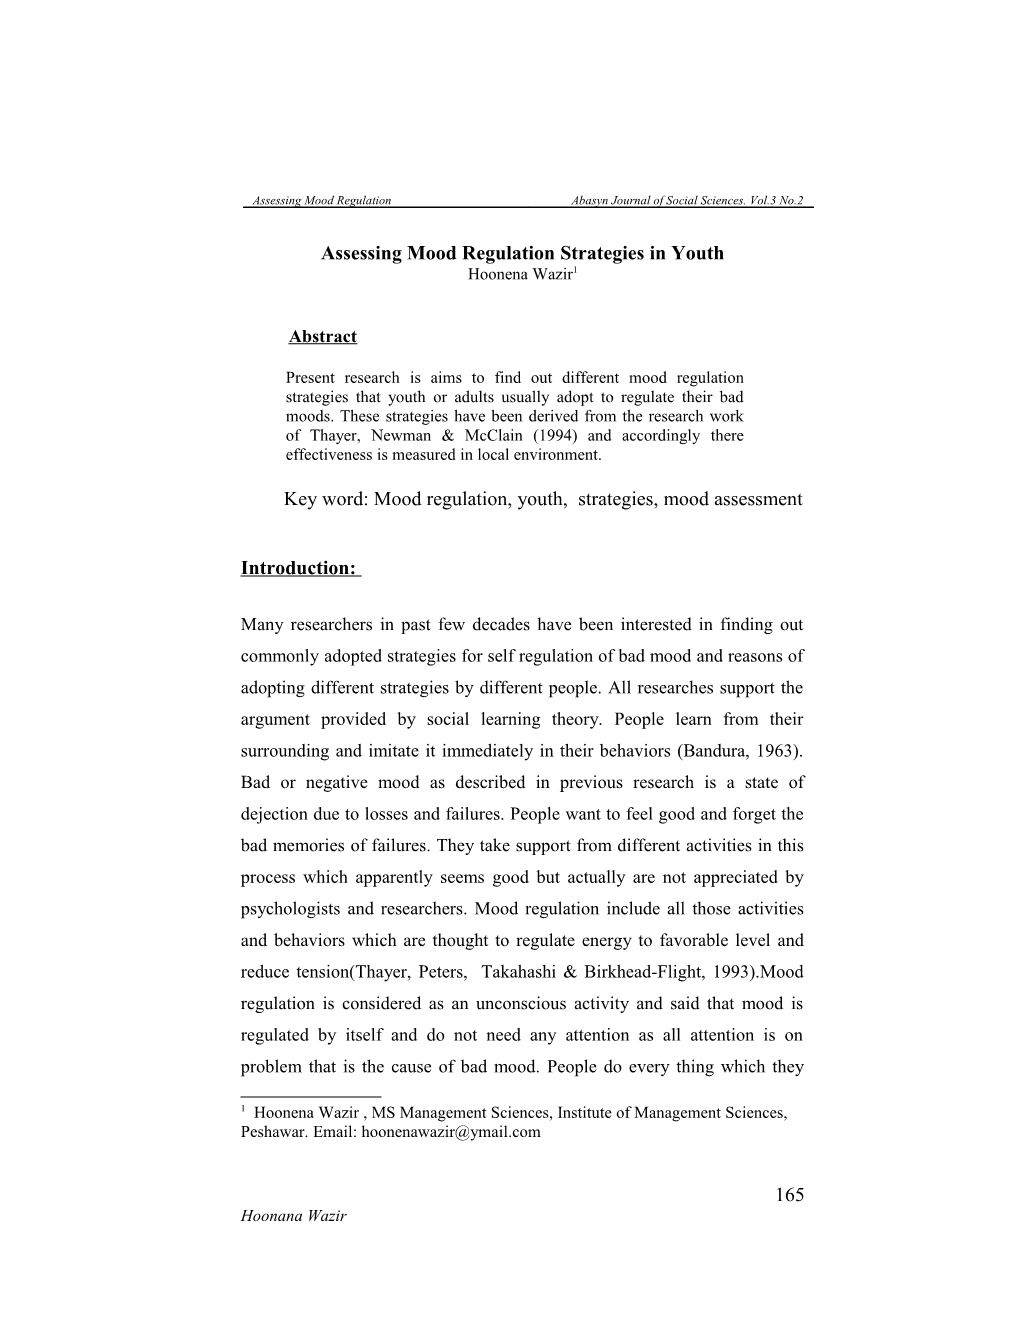 Decision Making & Good Governance Abasyn Journal of Social Sciences. Vol.3, No.1